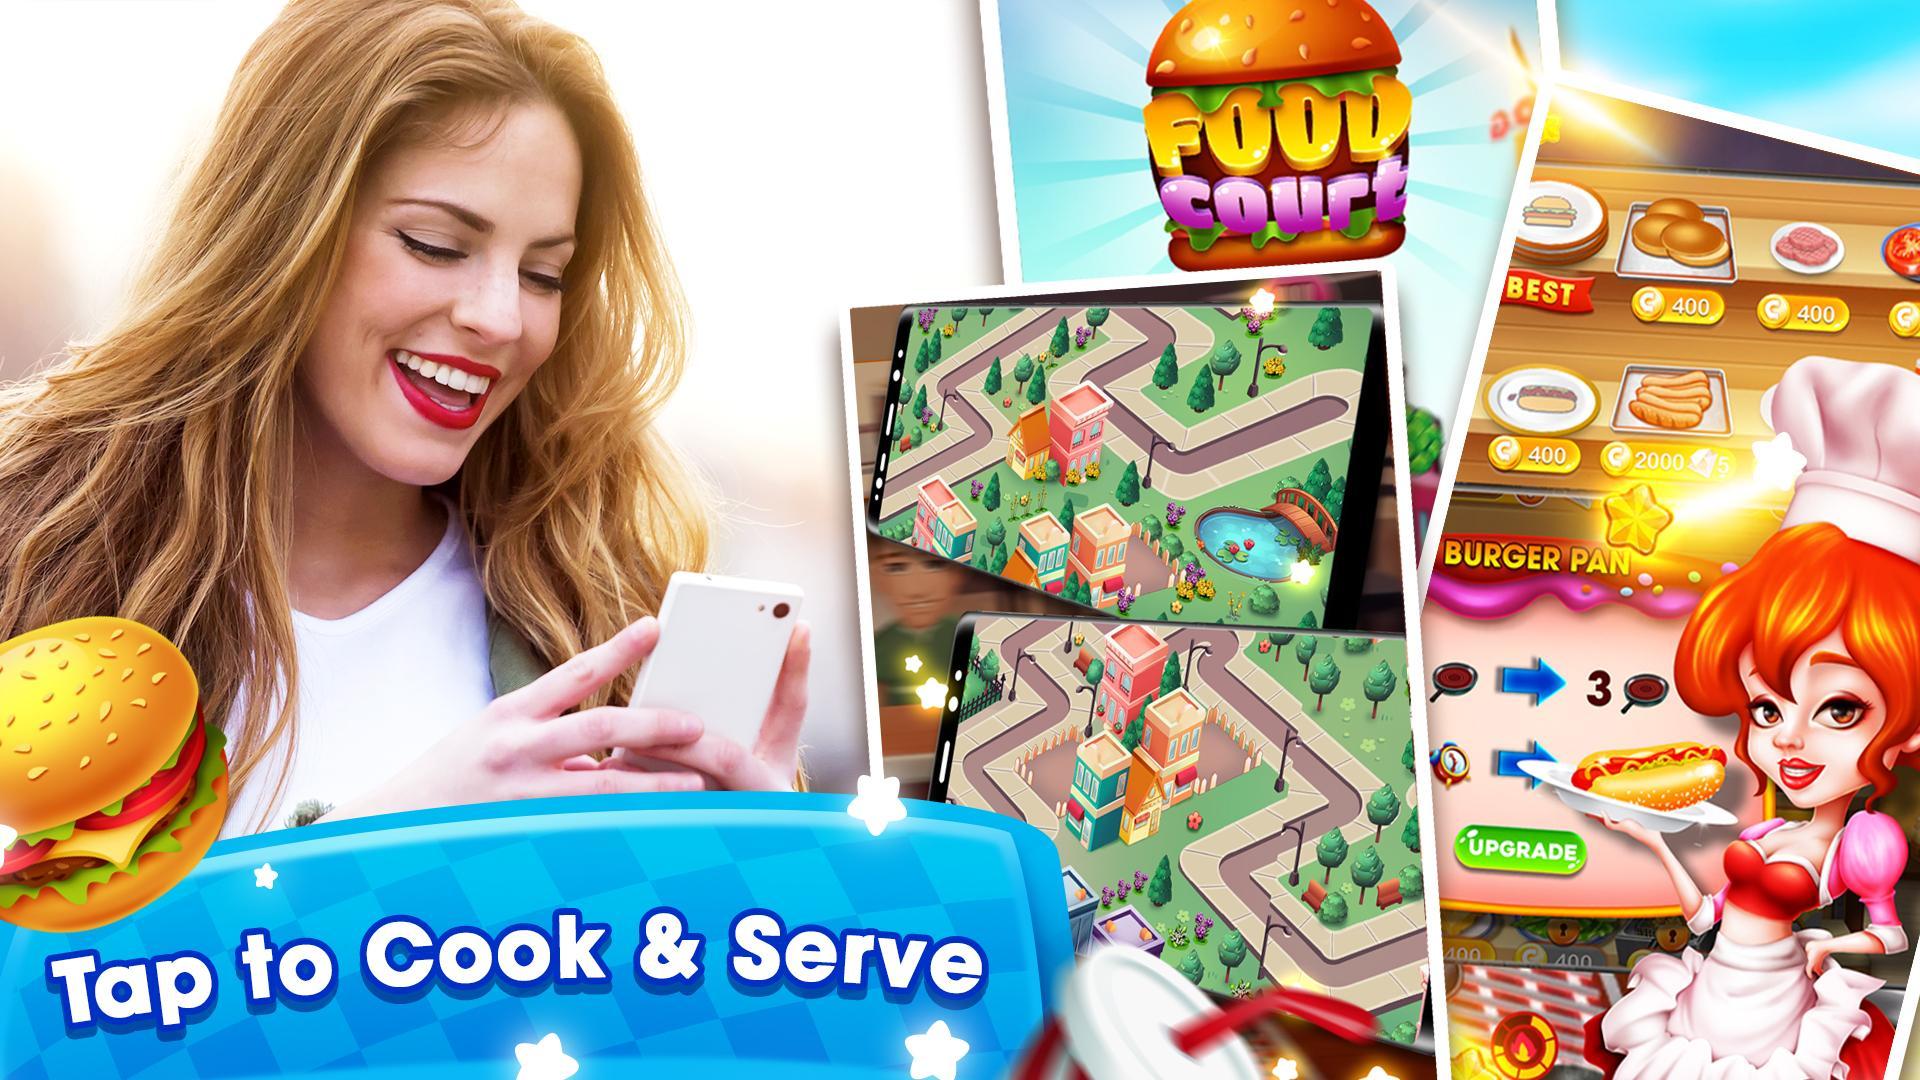 Food Court - Crazy Chef Restaurant Cooking Gamesのキャプチャ